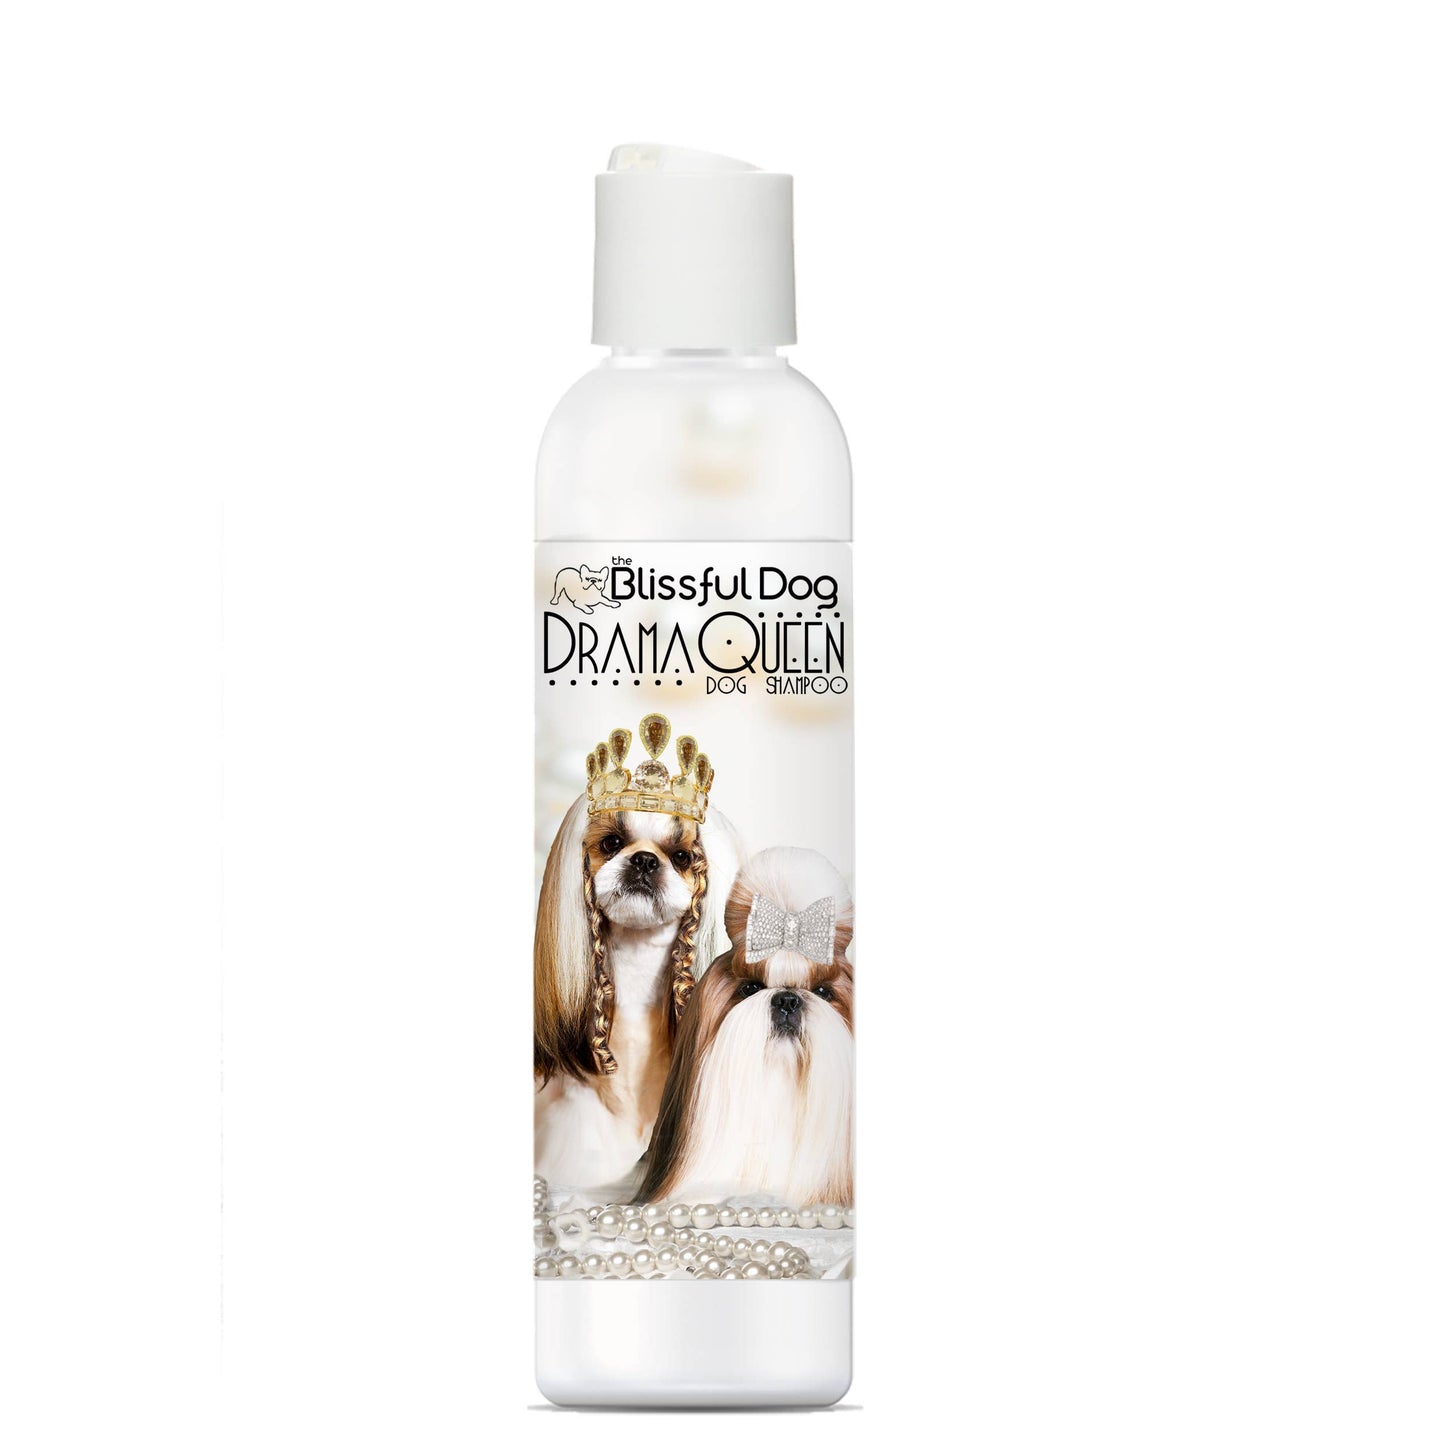 Drama Queen Dog Shampoo for Demanding Diva Dog